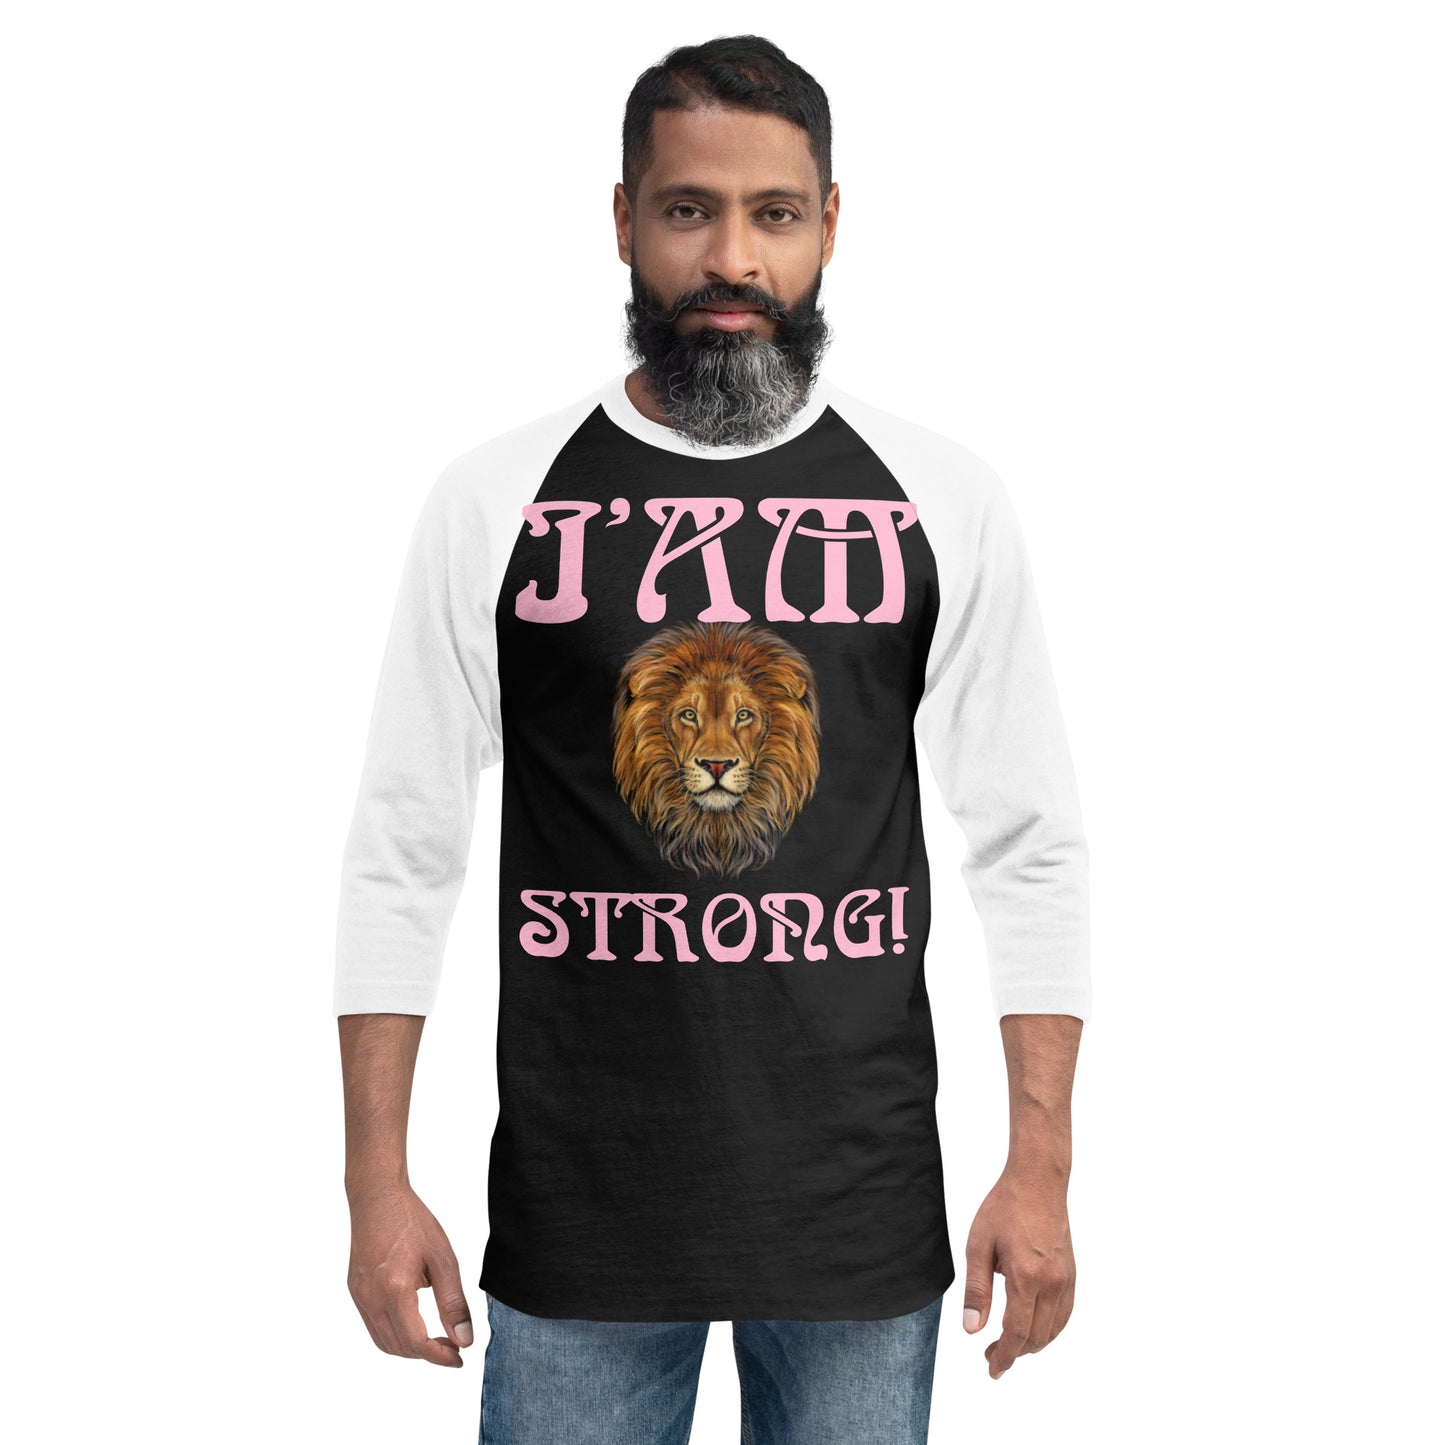 “I’AM STRONG!” 3/4 Sleeve Raglan Shirt W/Cotton Candy Font